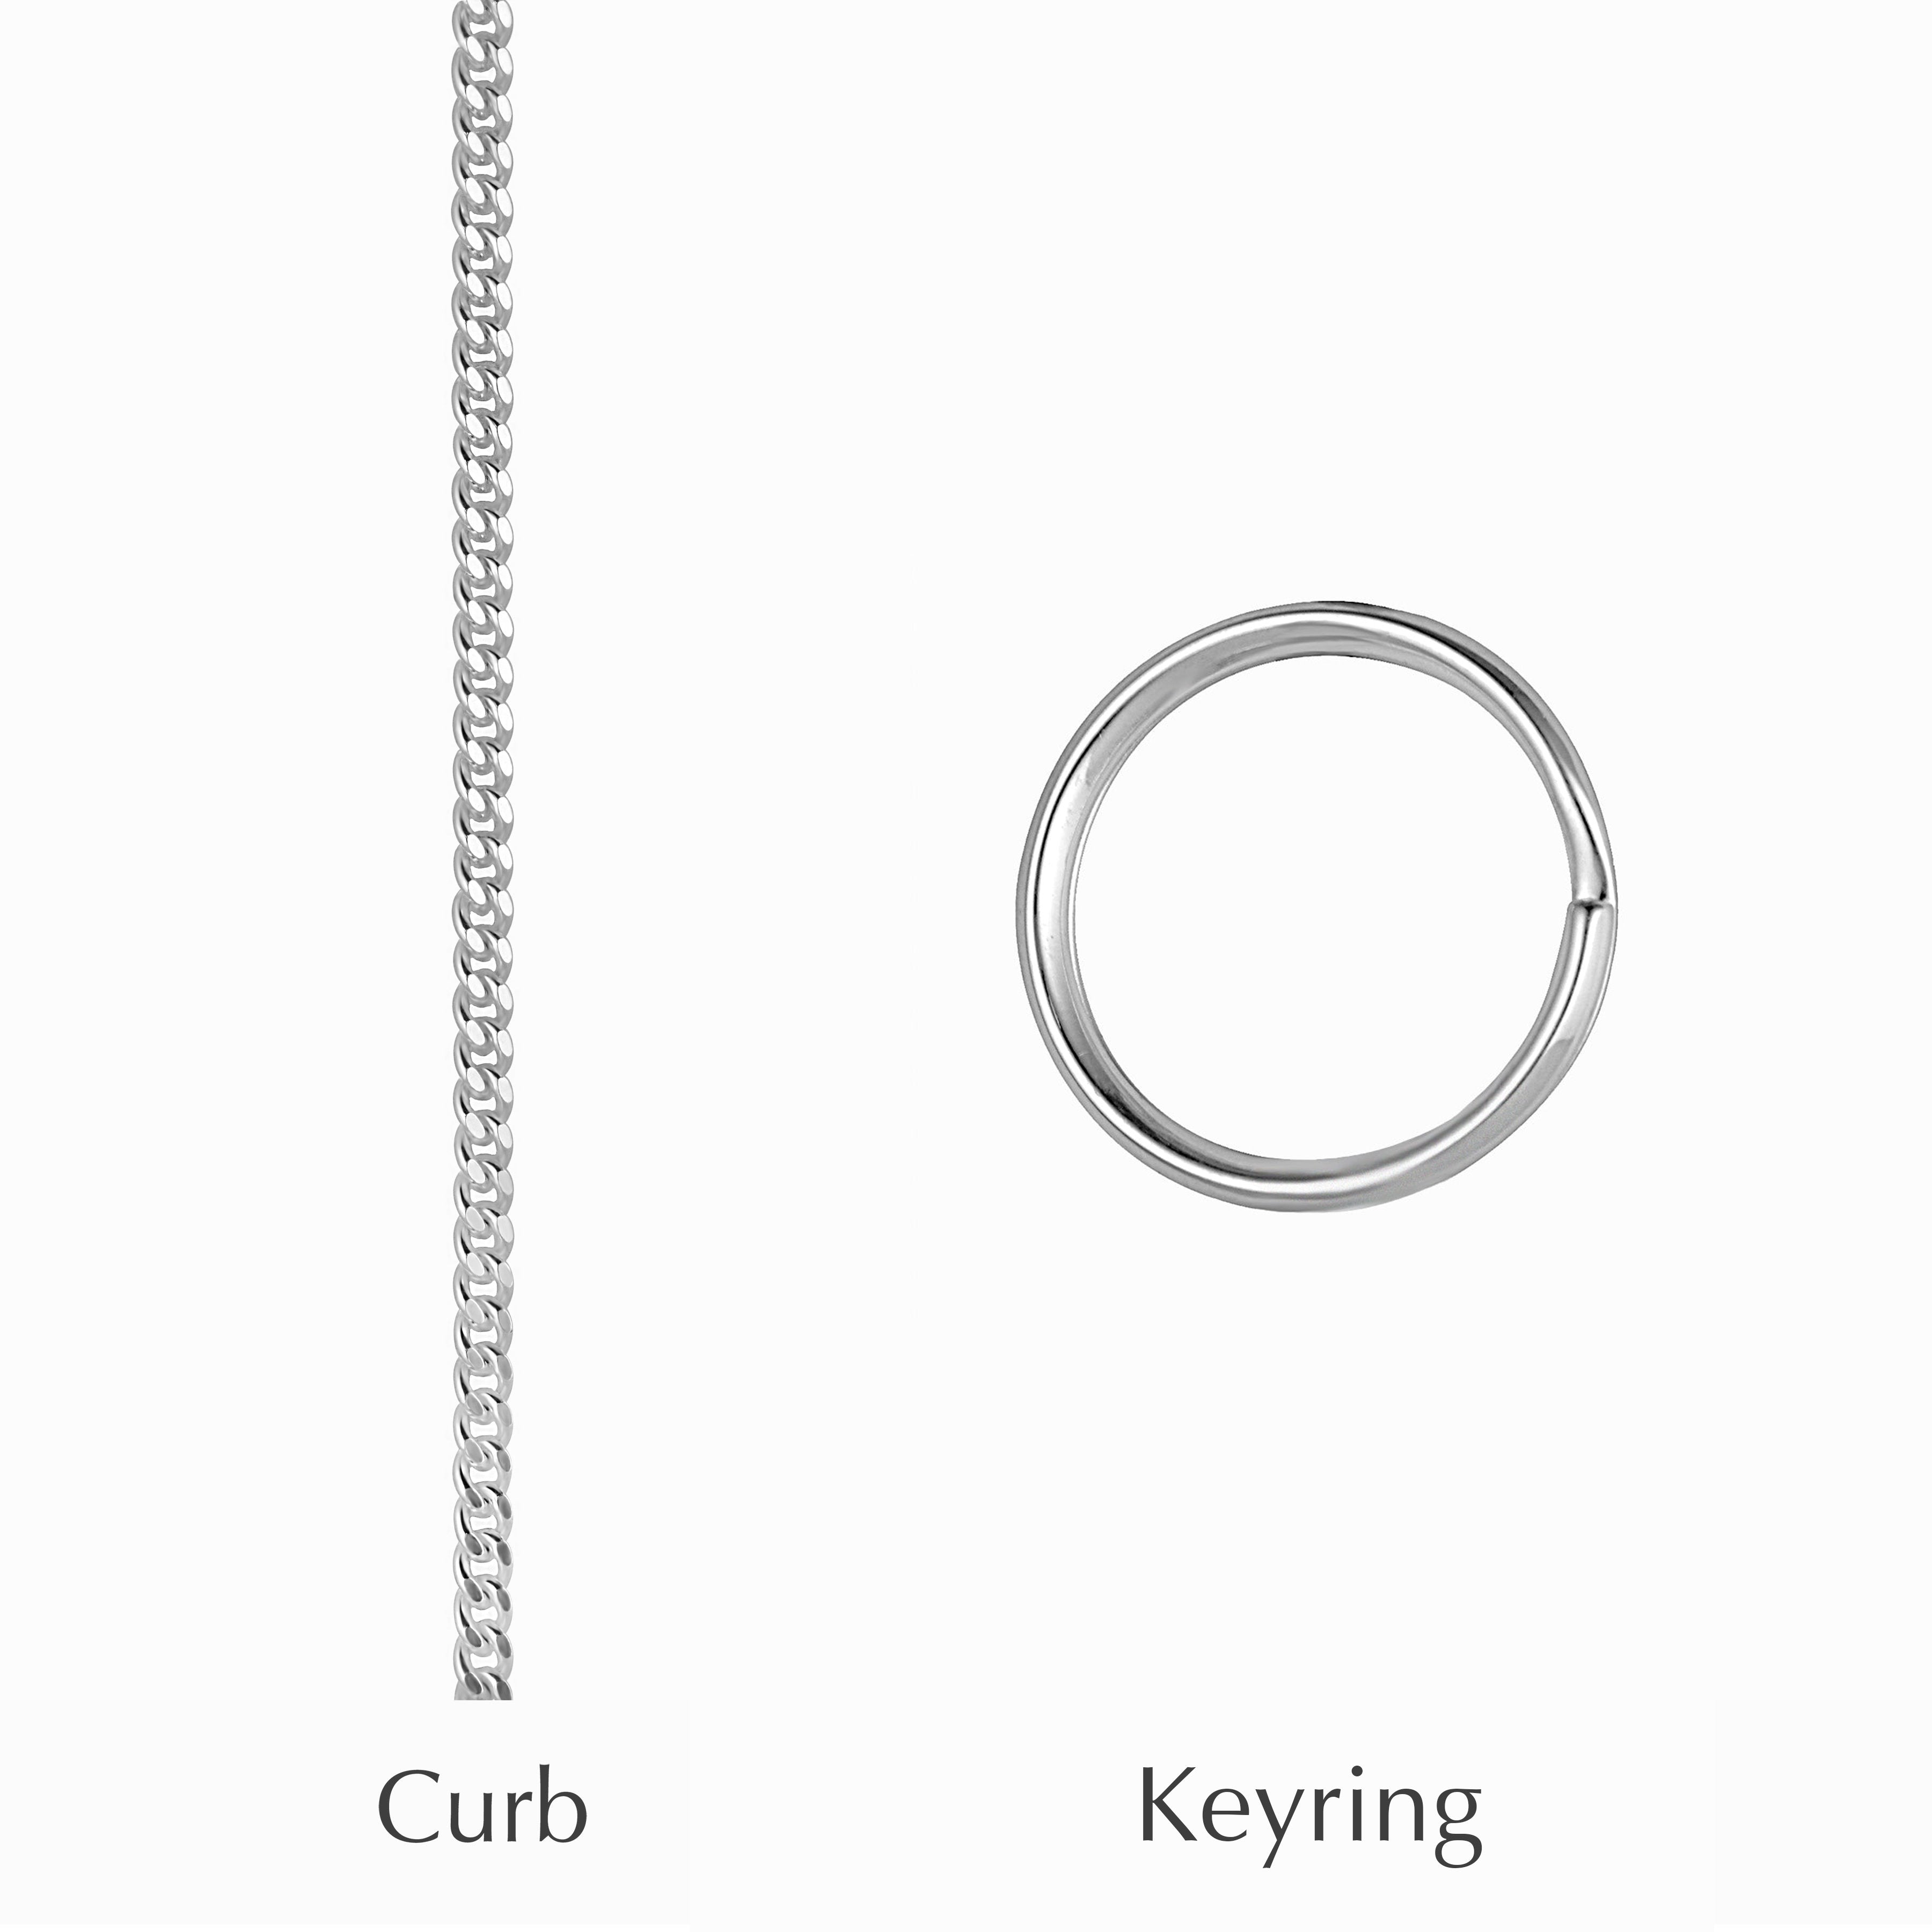 Product title: Cube Design Locket, product type: Locket